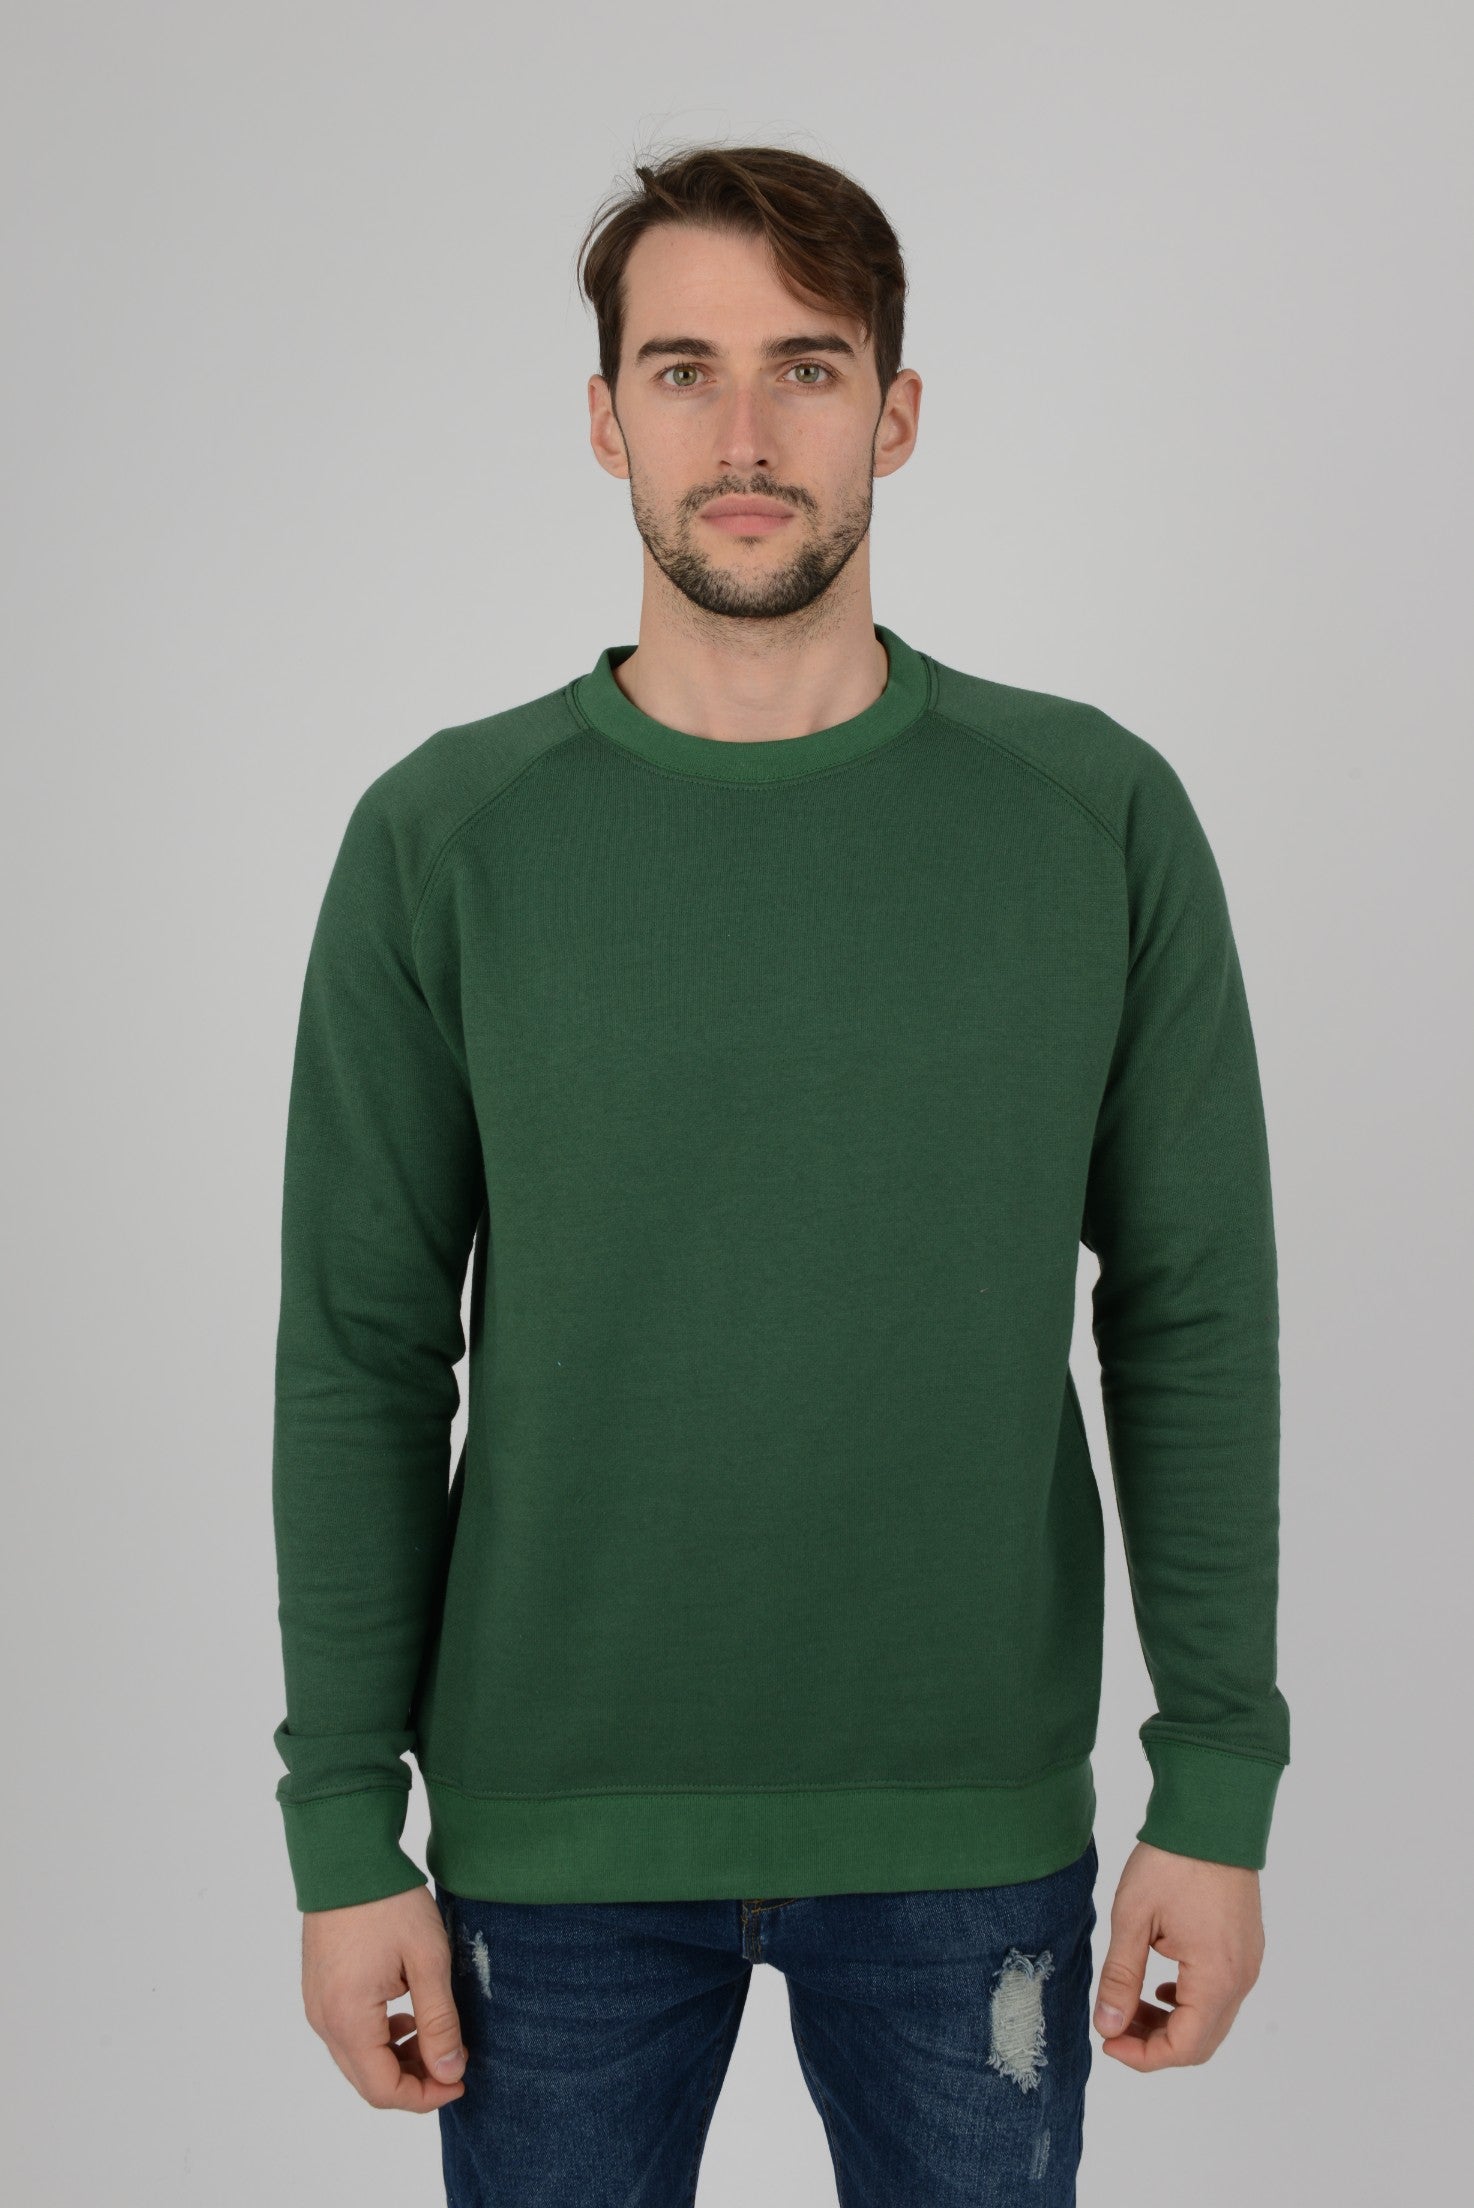 Mens-Raglan-Sweatshirt-Sweater-Bottle-Green